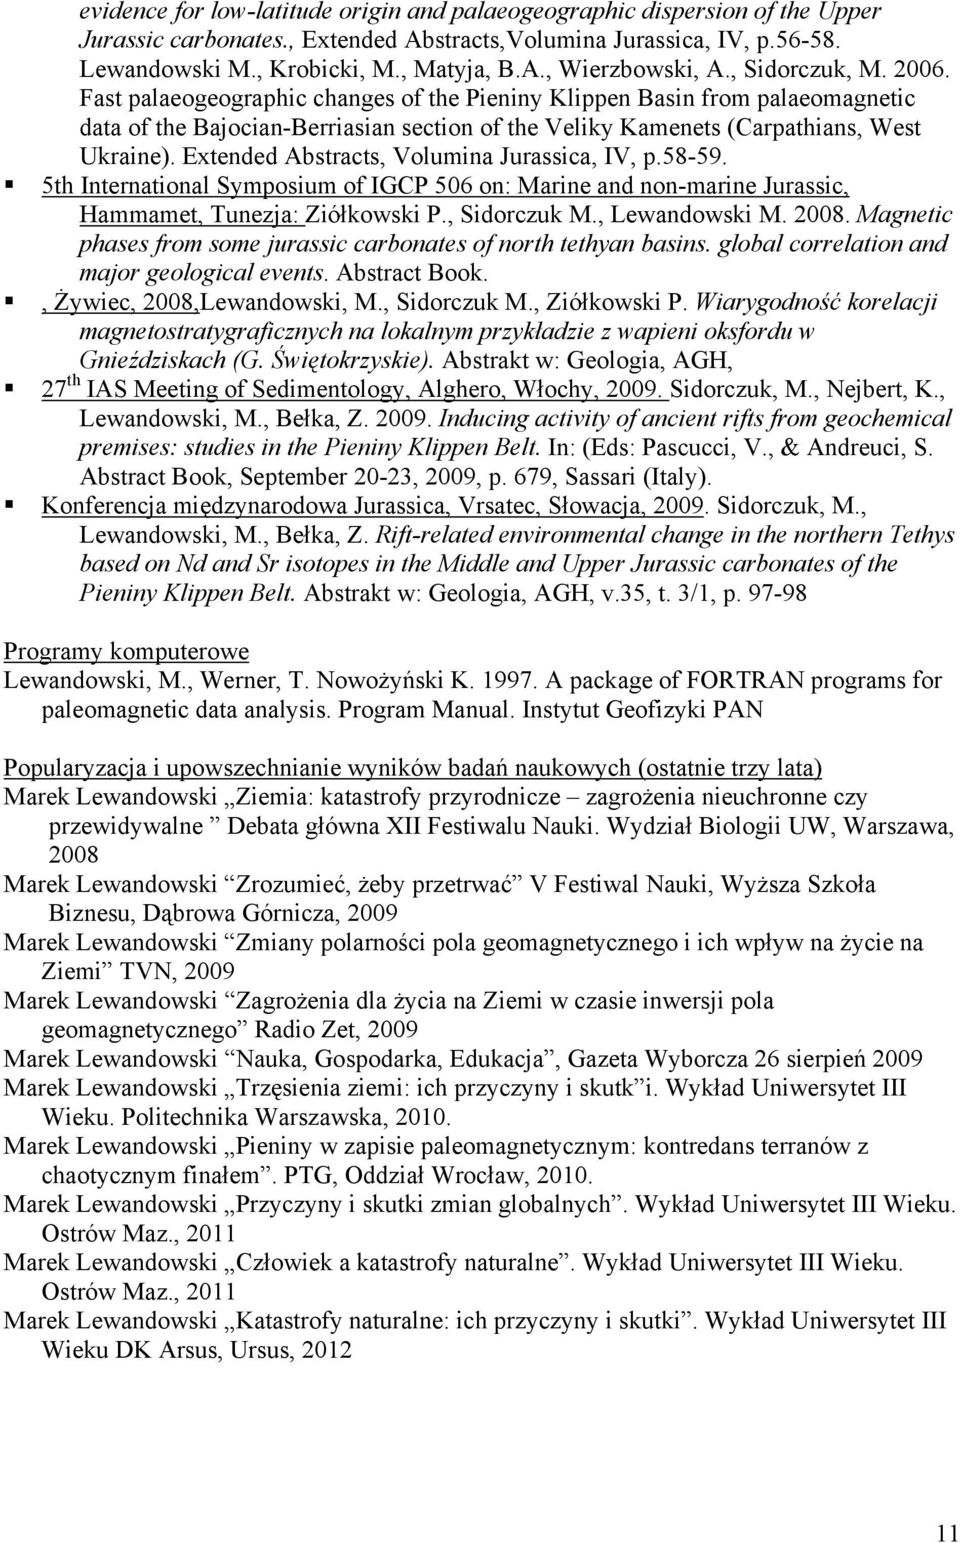 Extended Abstracts, Volumina Jurassica, IV, p.58-59. 5th International Symposium of IGCP 506 on: Marine and non-marine Jurassic, Hammamet, Tunezja: Ziółkowski P., Sidorczuk M., Lewandowski M. 2008.